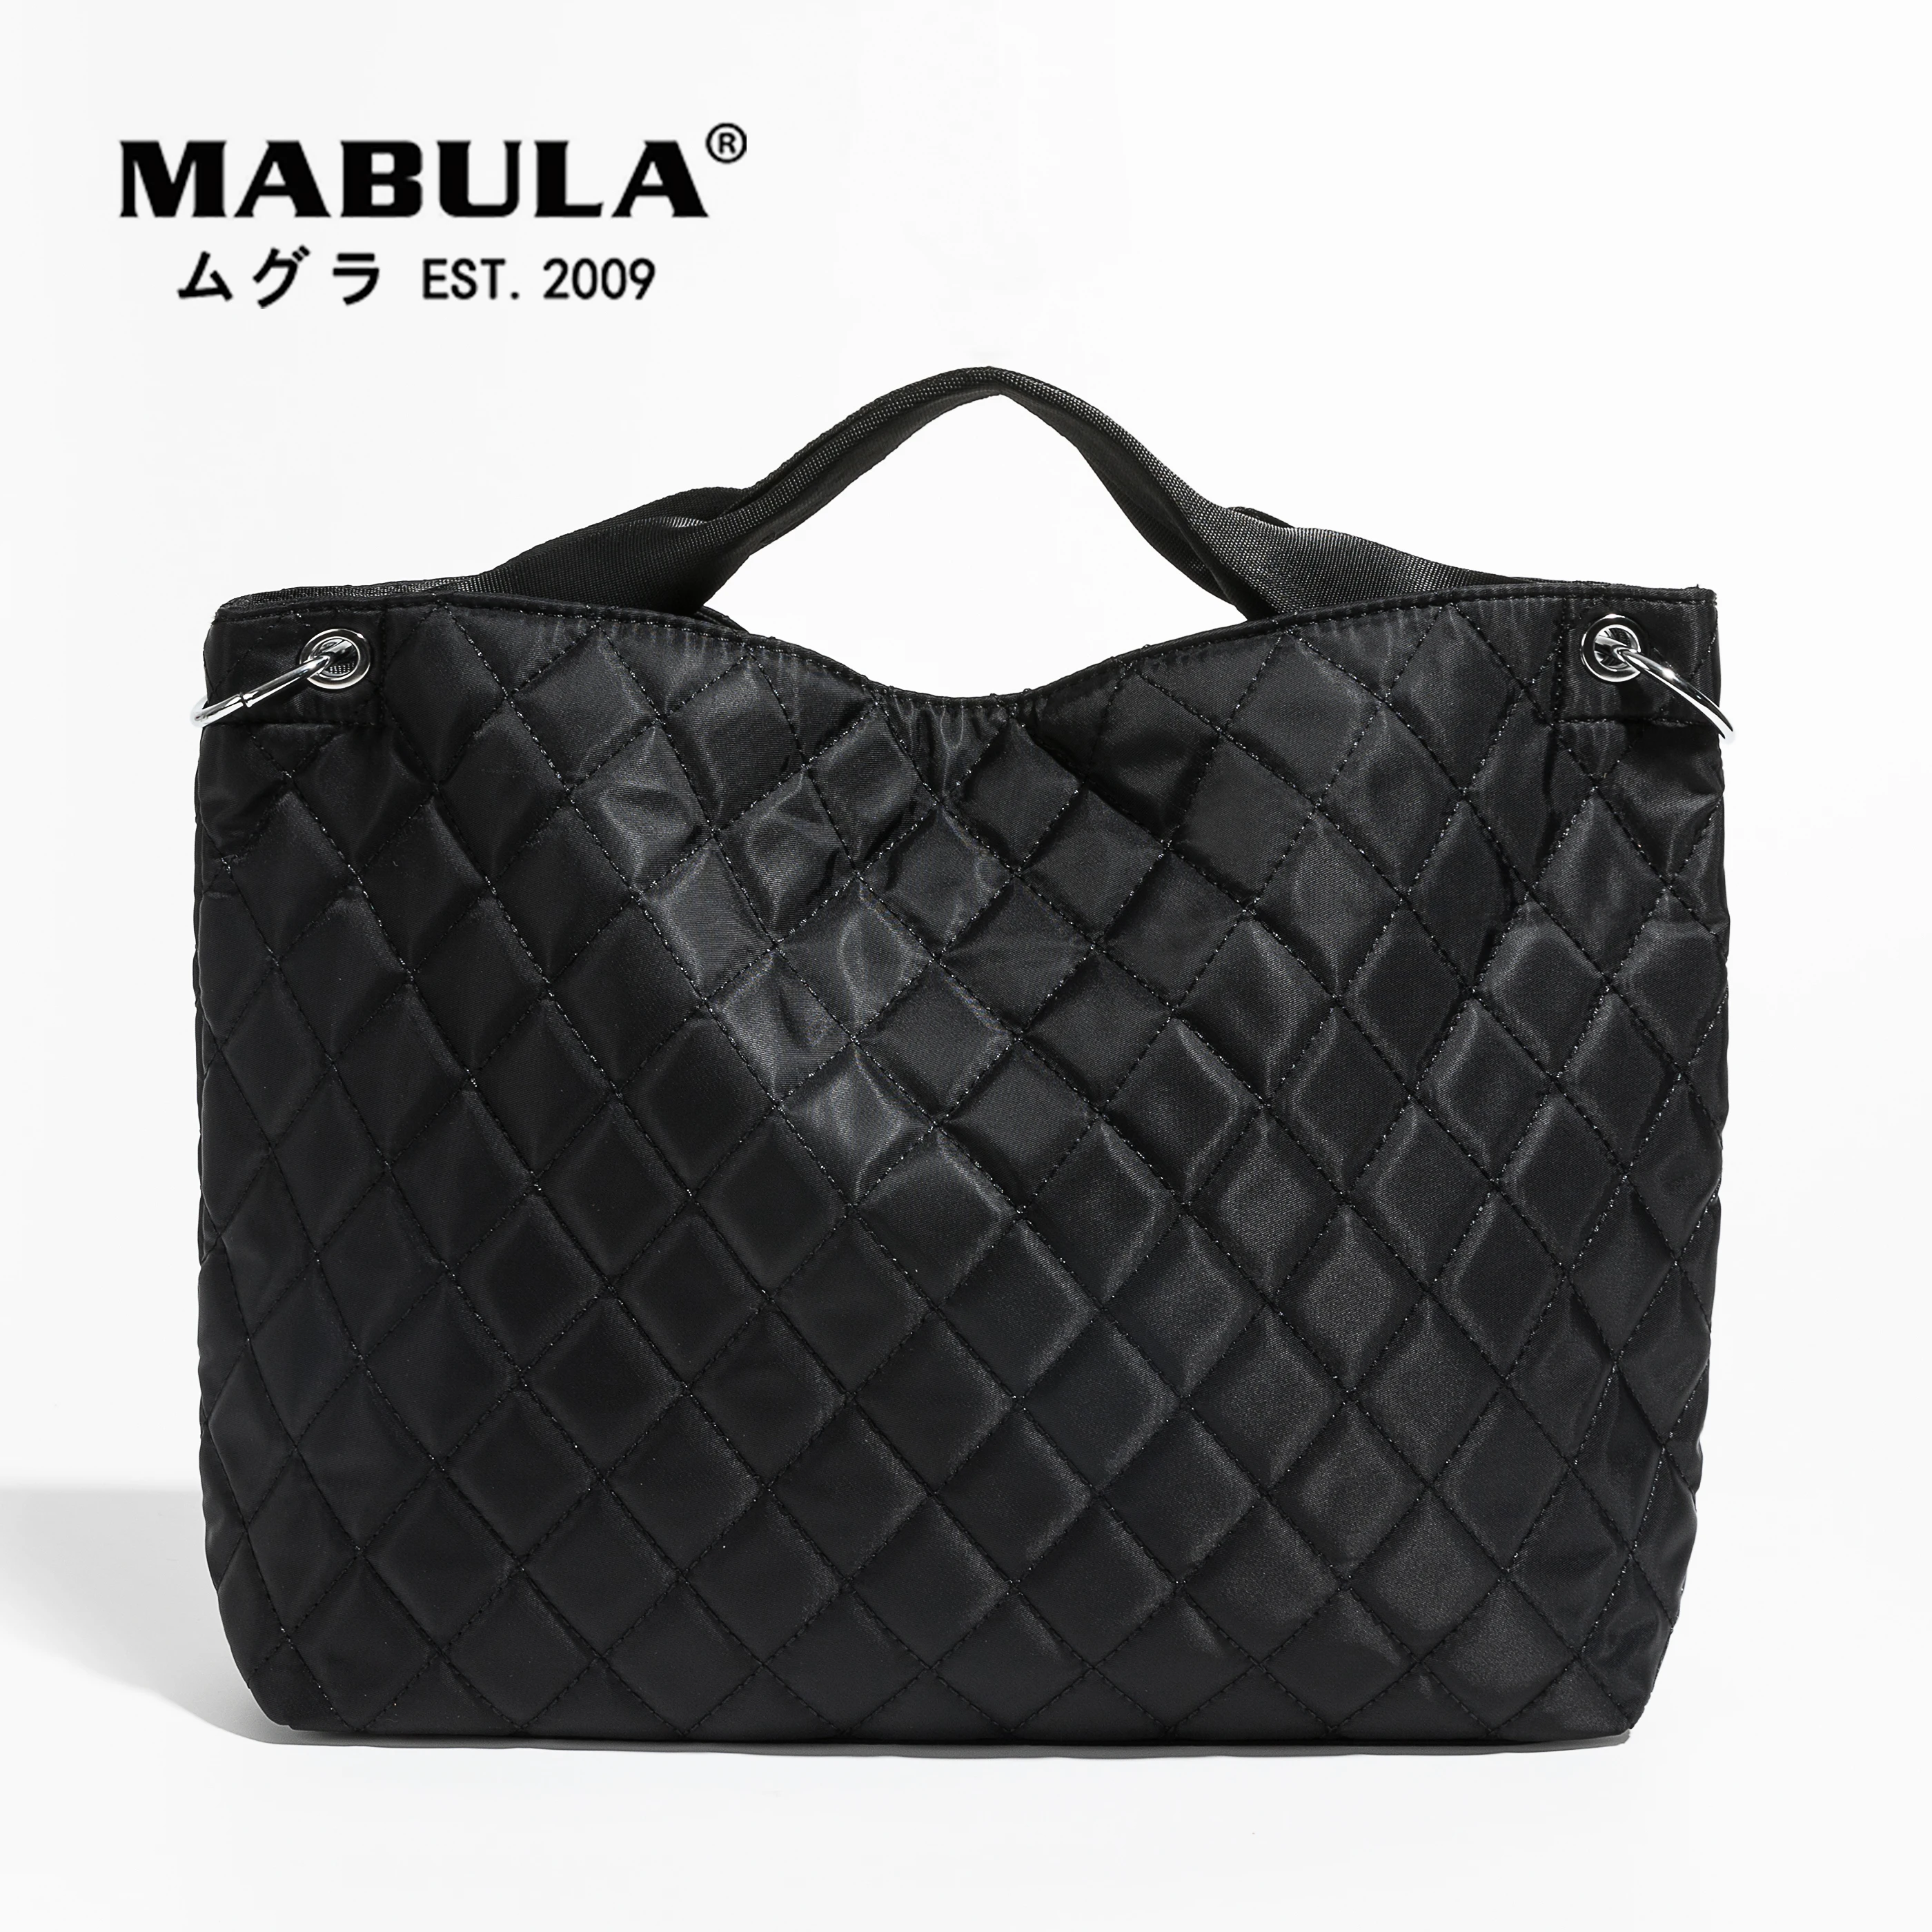 

MABULA Simple Design Women Casual Large Tote Handbags Purses Black Nylon Quilted Shoulder Bags Square Hobo Crossbody Bag